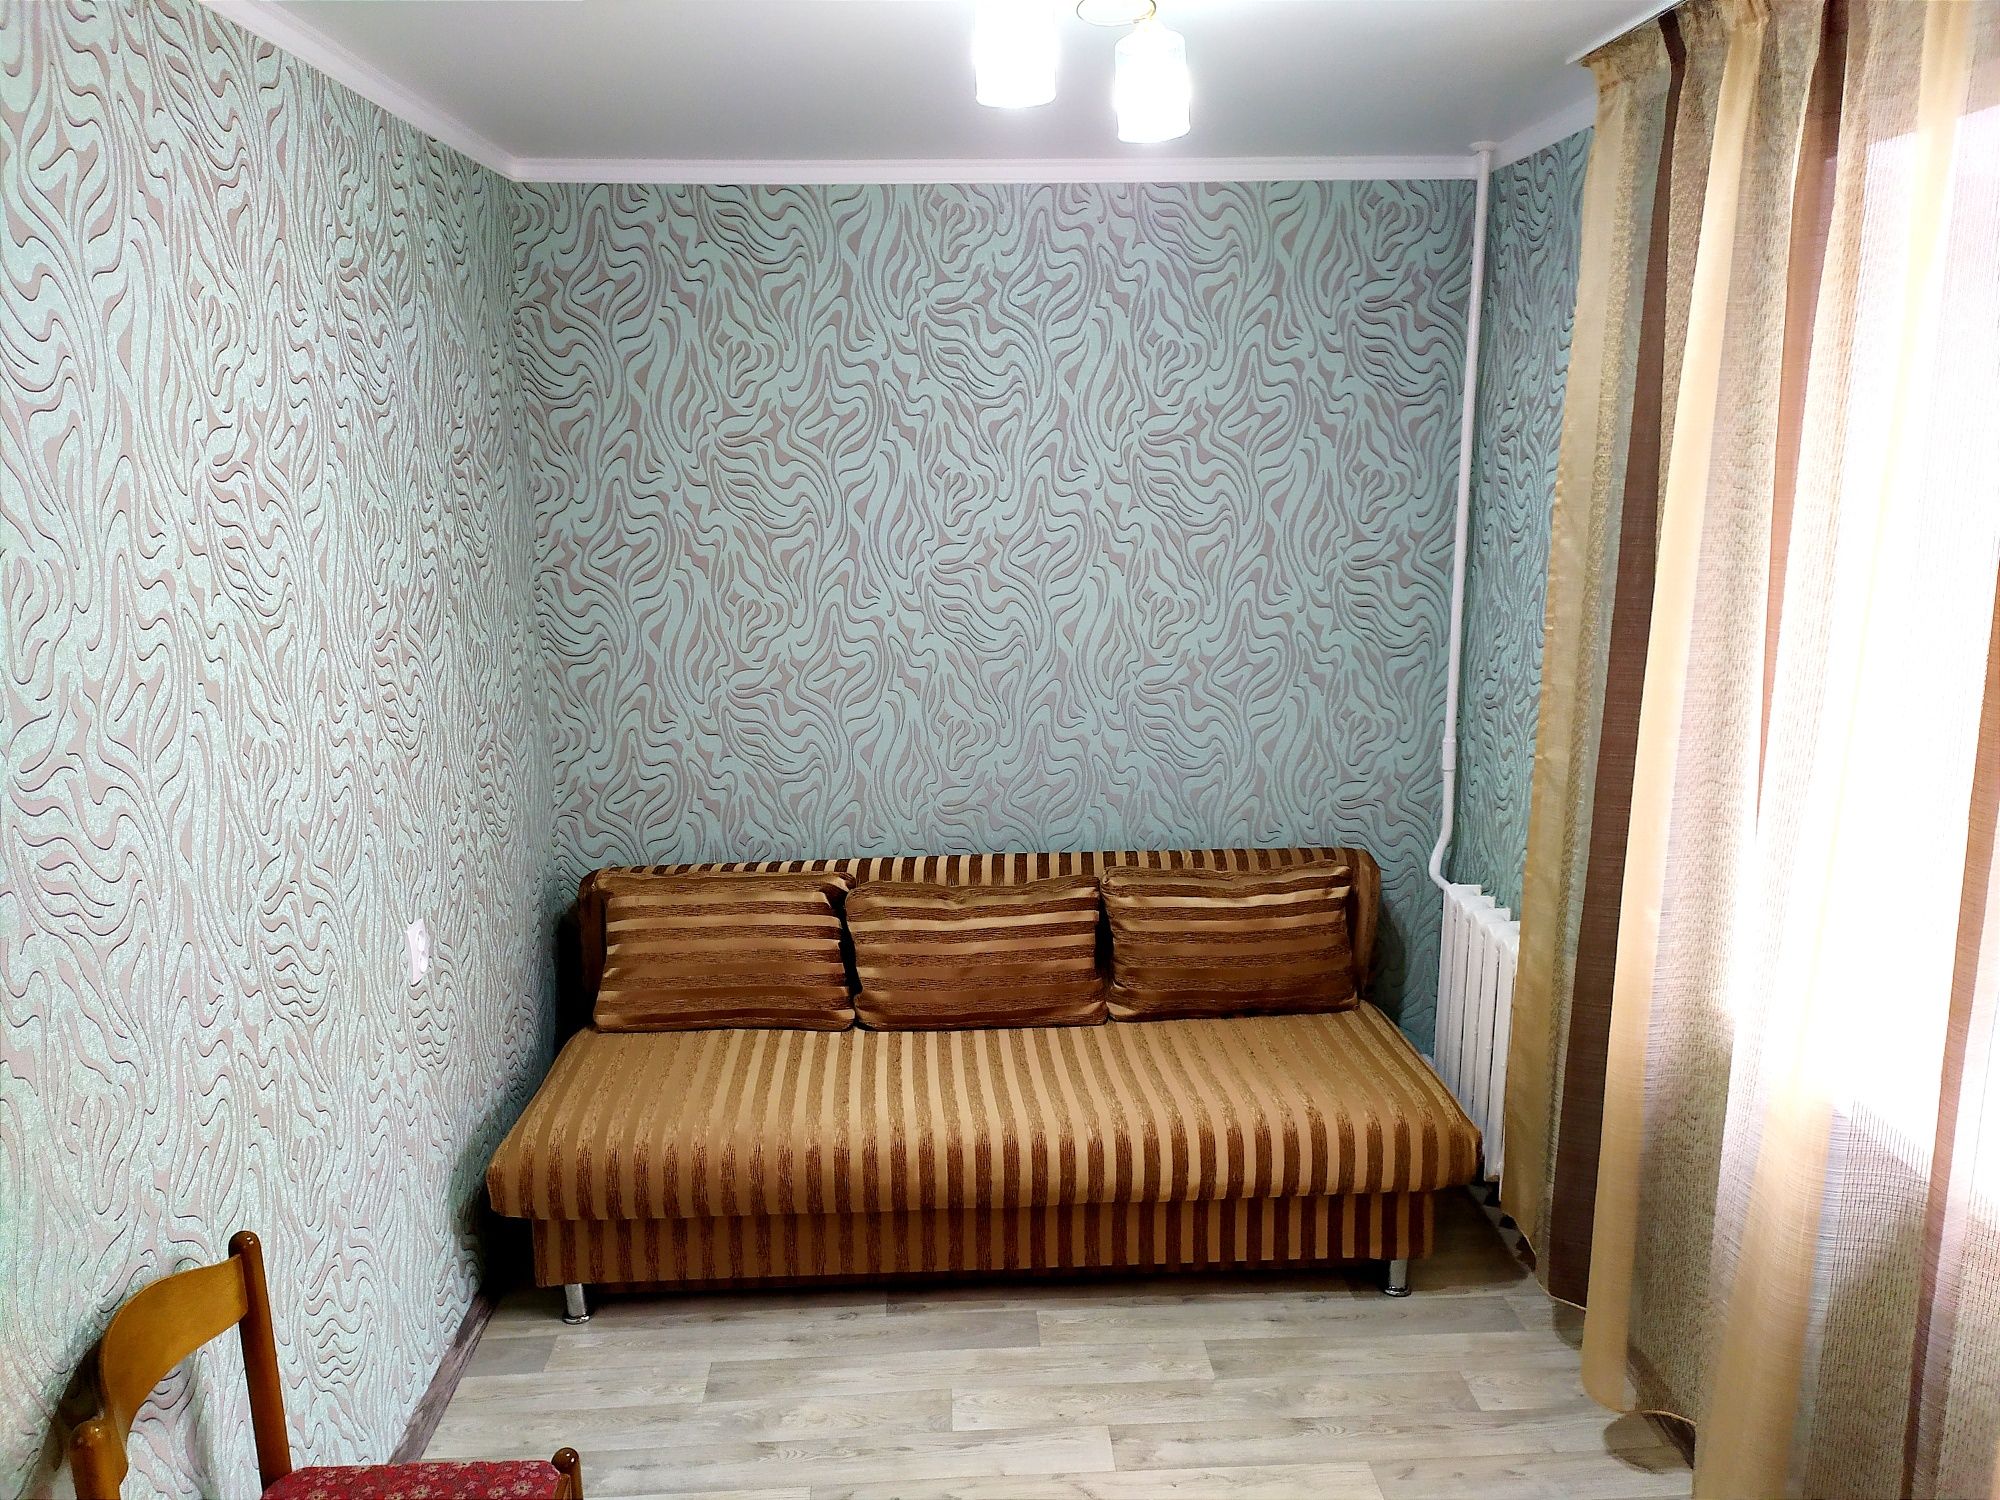 4-х комнатная комфортная квартира в центре ЦУМ